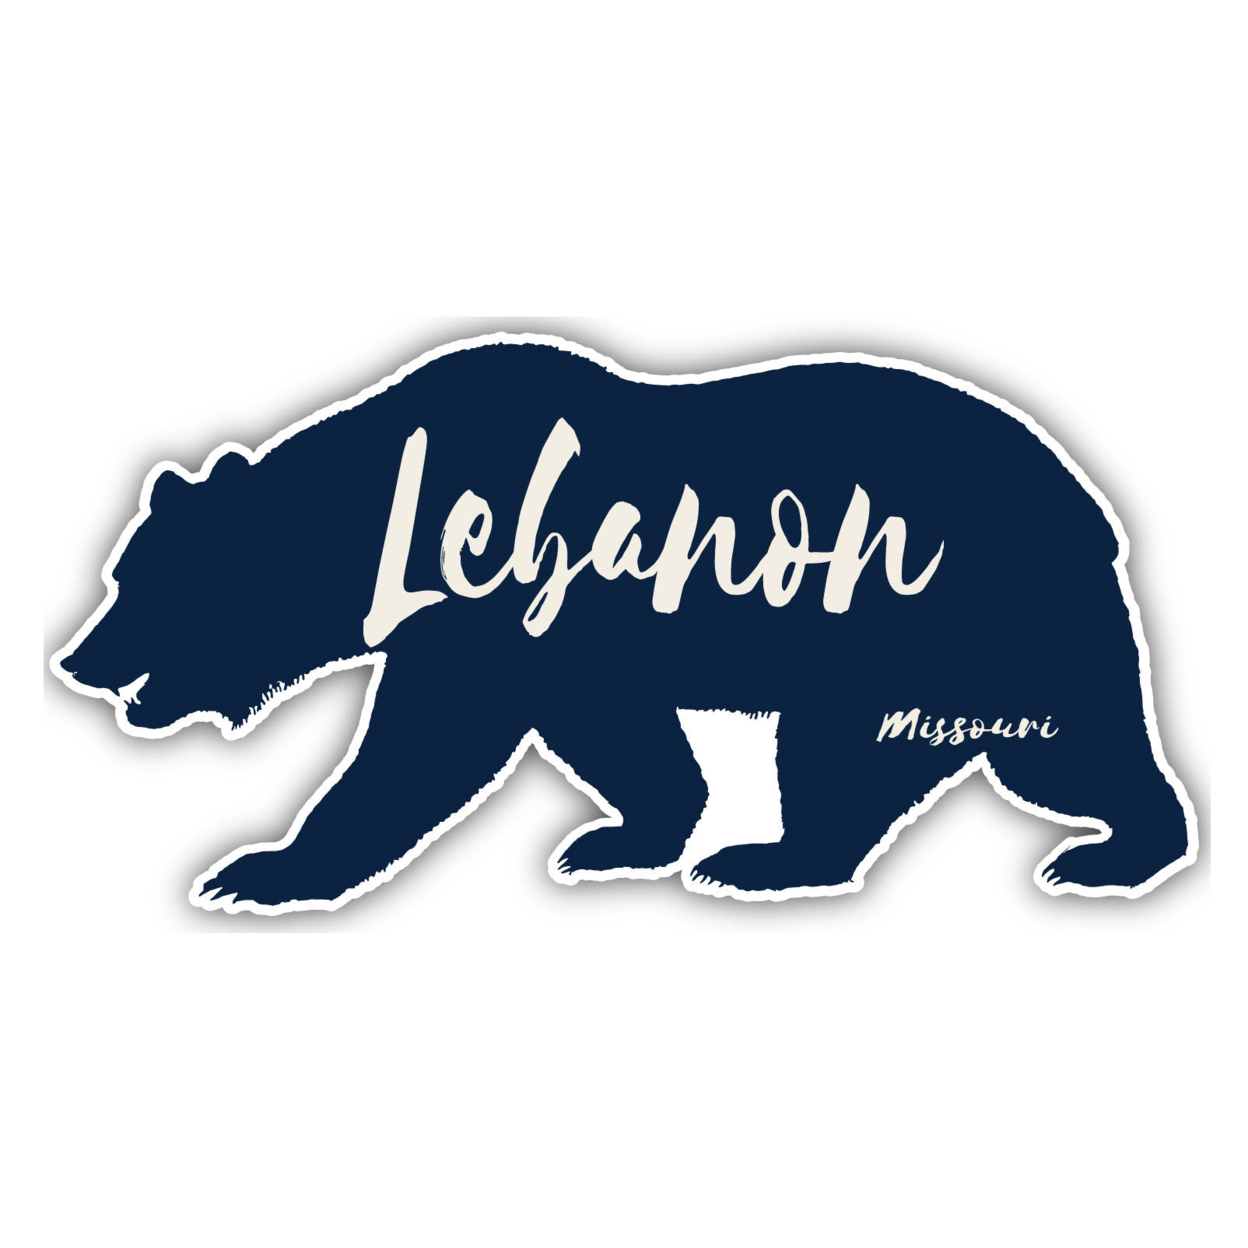 Lebanon Missouri Souvenir Decorative Stickers (Choose Theme And Size) - 4-Inch, Tent